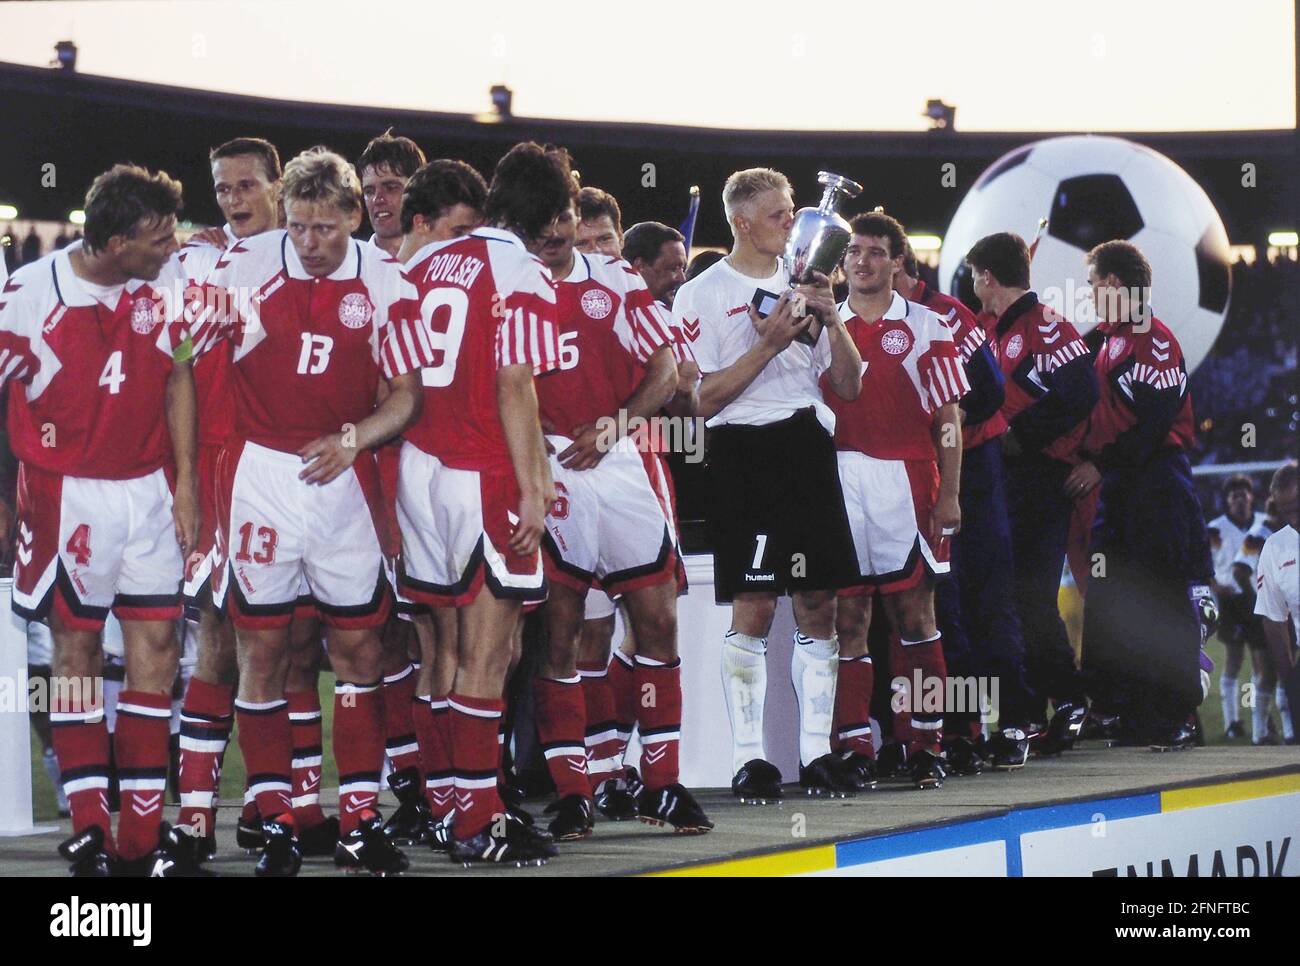 FOOTBALL European 1992 Denmark - Germany Final 26.06.1992 The team of Denmark cheers with the European Cup: Lars OLSEN, Henrik LARSEN, Flemming POVLSEN, Kim Peter SCHMEICHEL with the cup, John